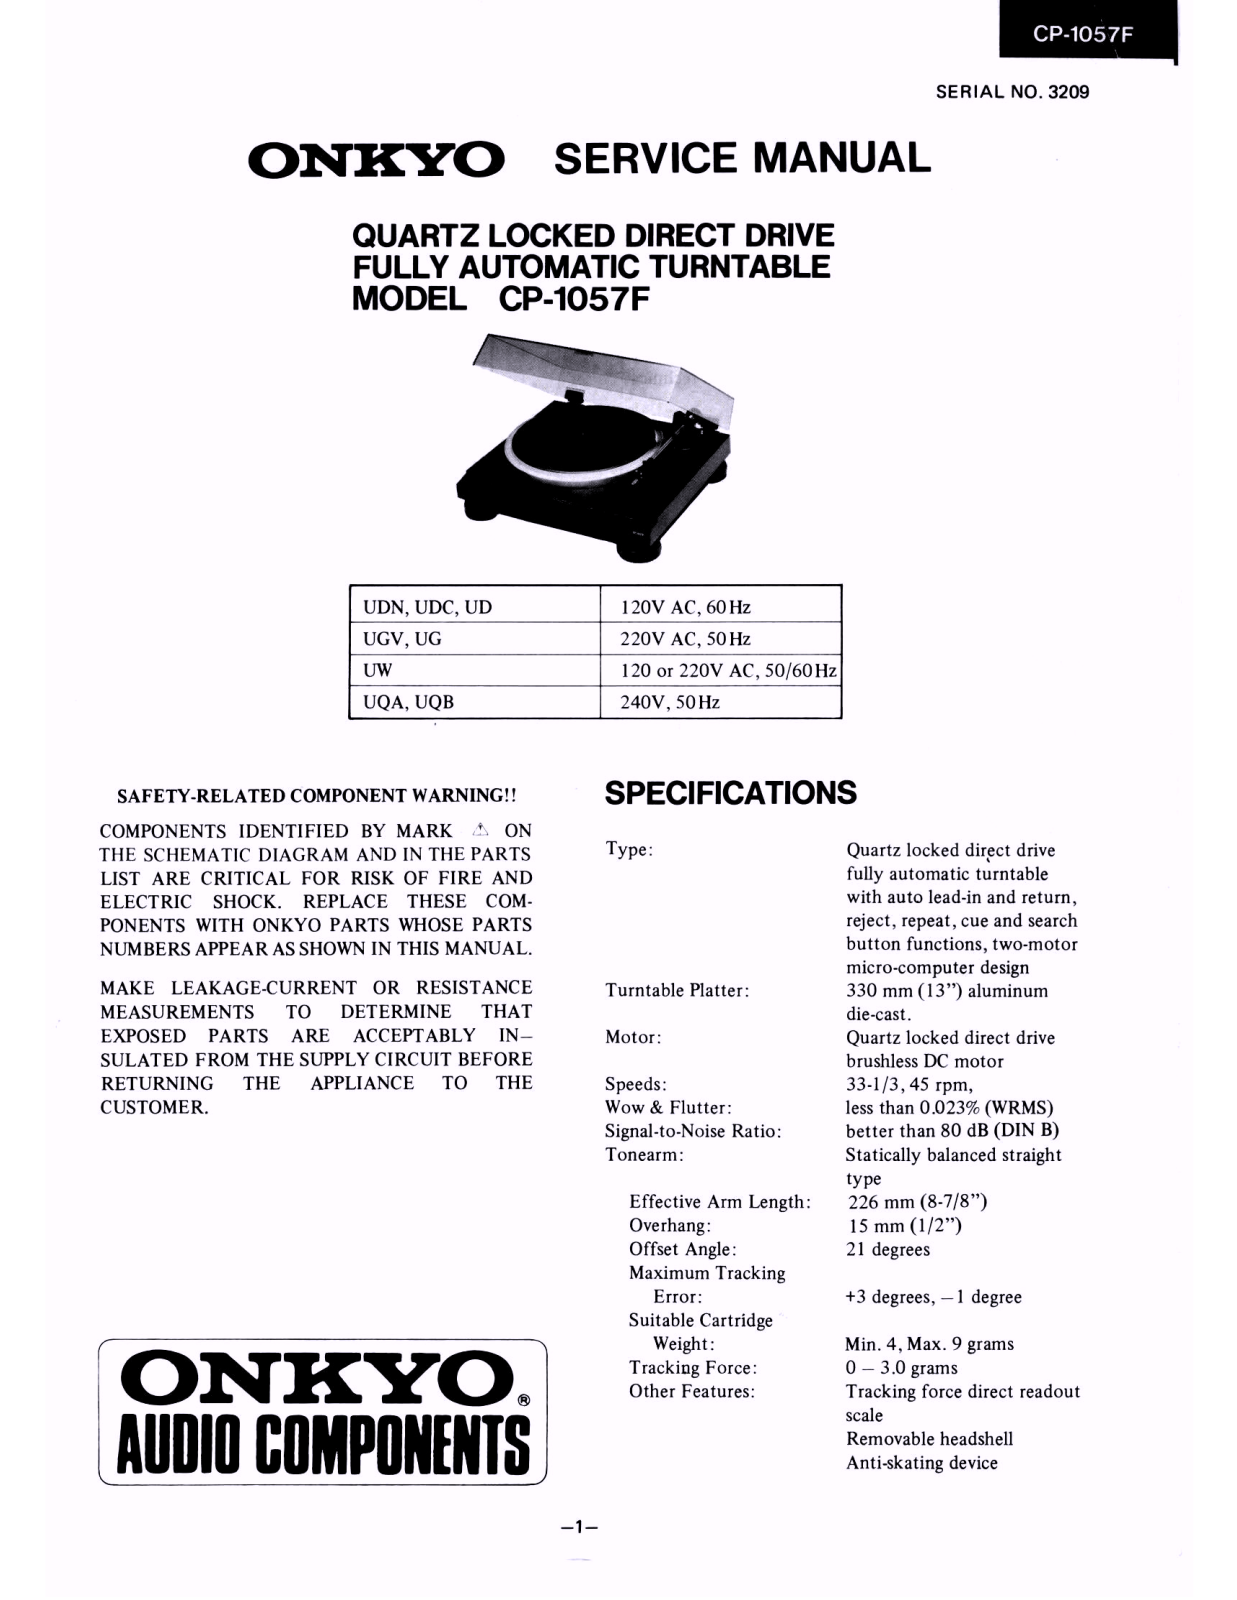 Onkyo CP-1057-F Service manual